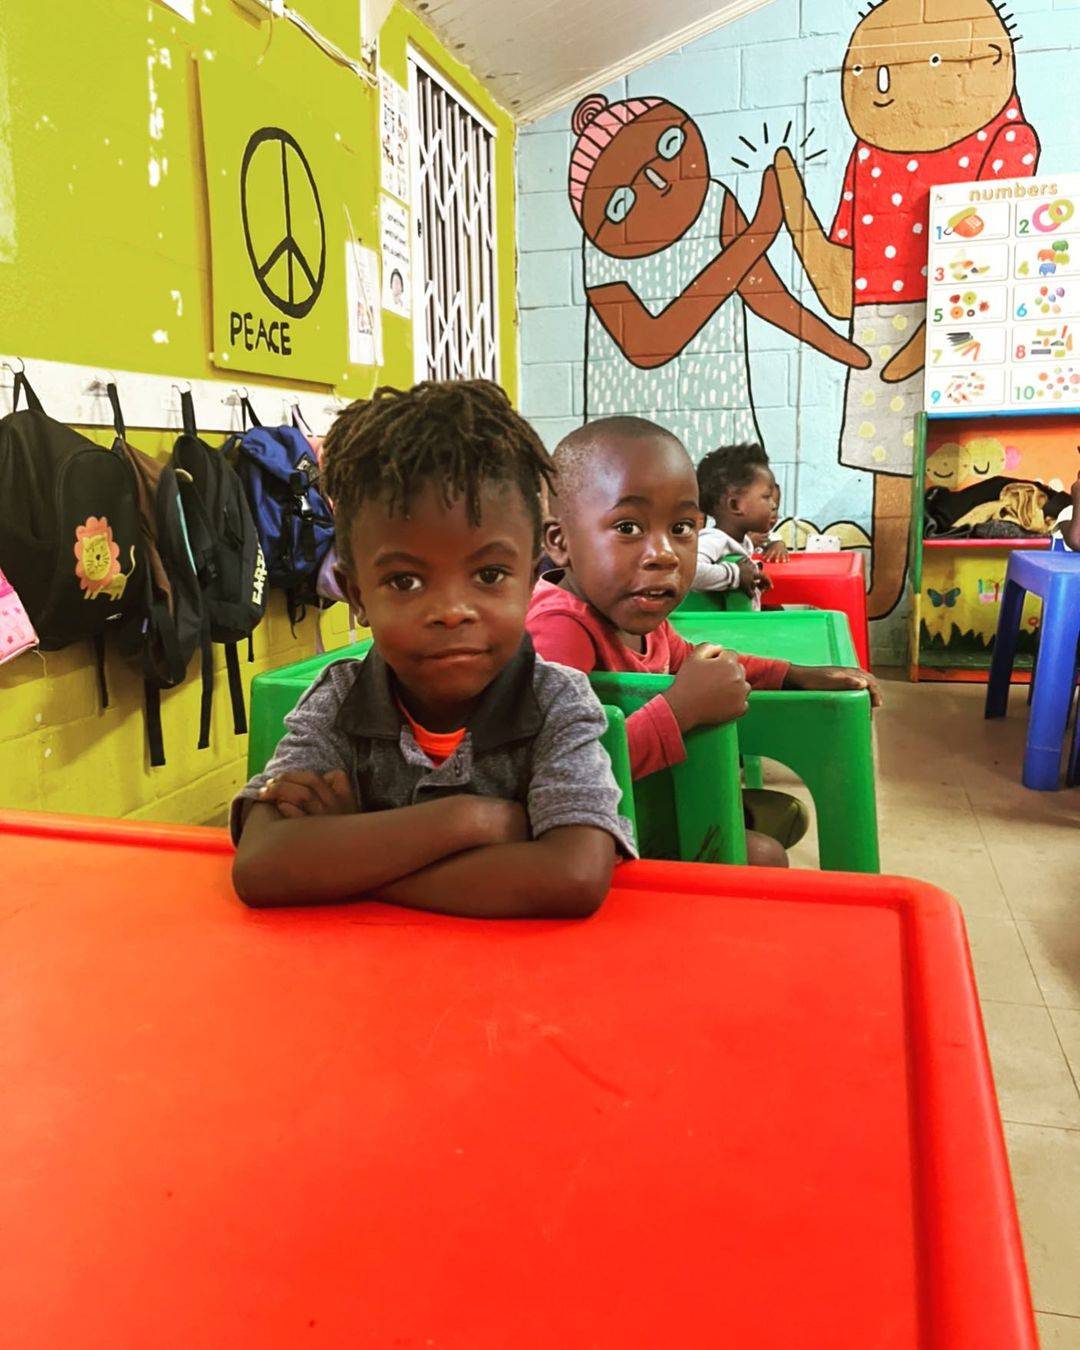 Meet Kleenvrygeestes, an NGO dedicated to building kindergartens for South African communities in need.